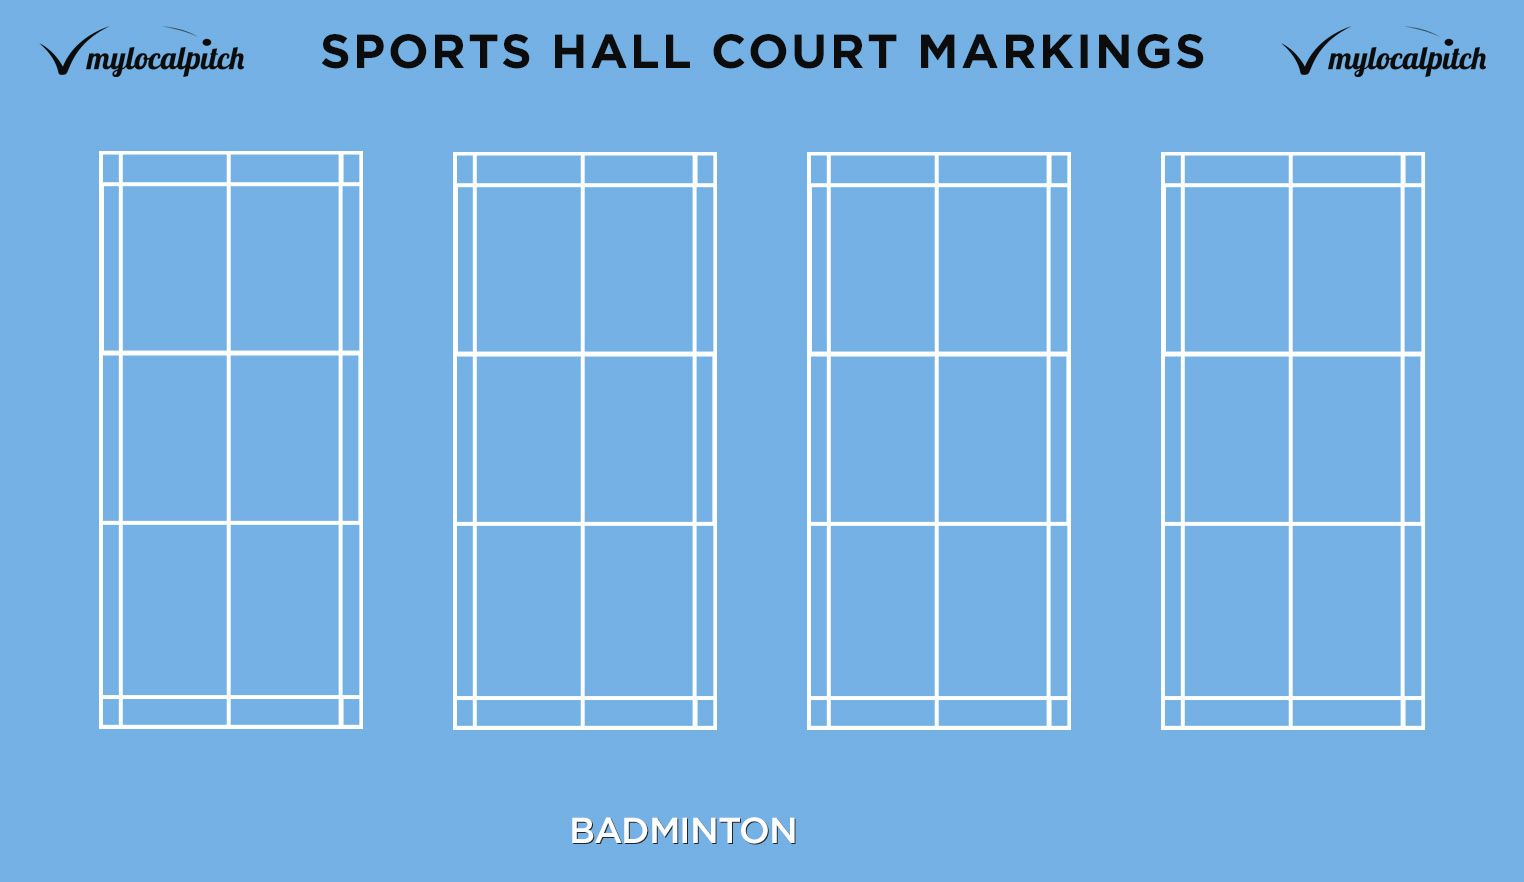 Badminton sports hall court markings